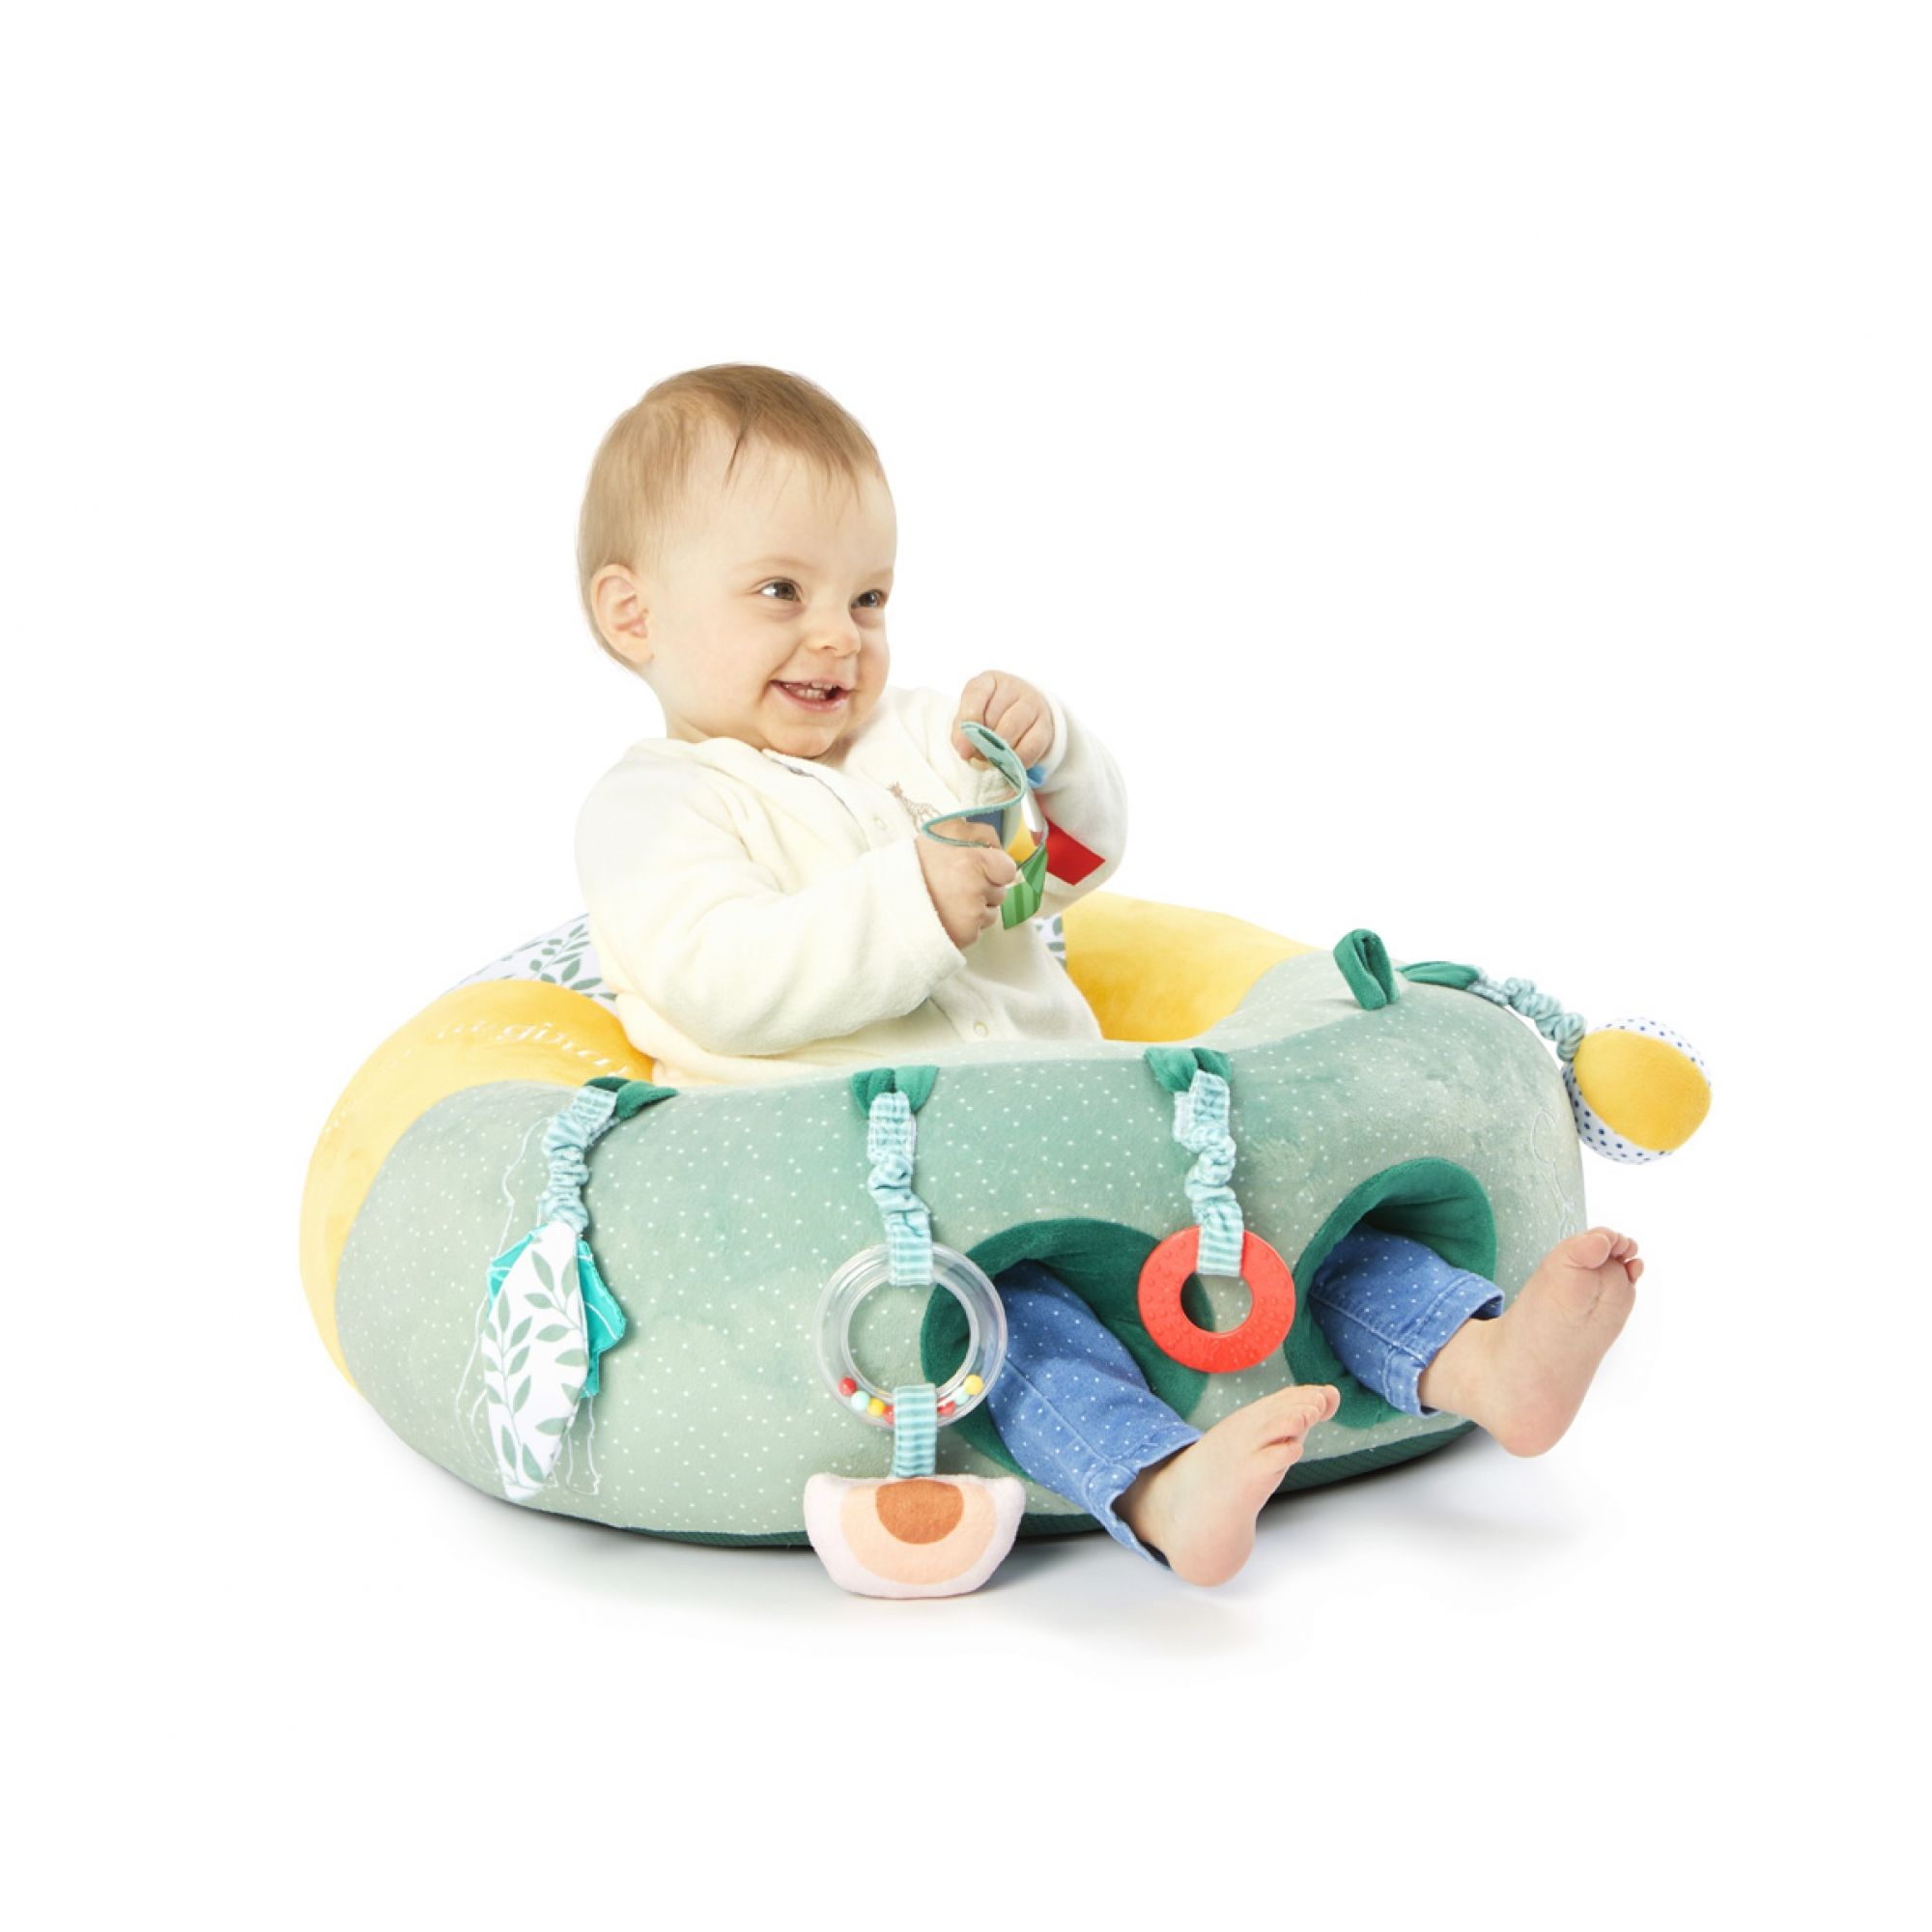 Baby Seat and play sophie la girafe VULLI : Comparateur, Avis, Prix